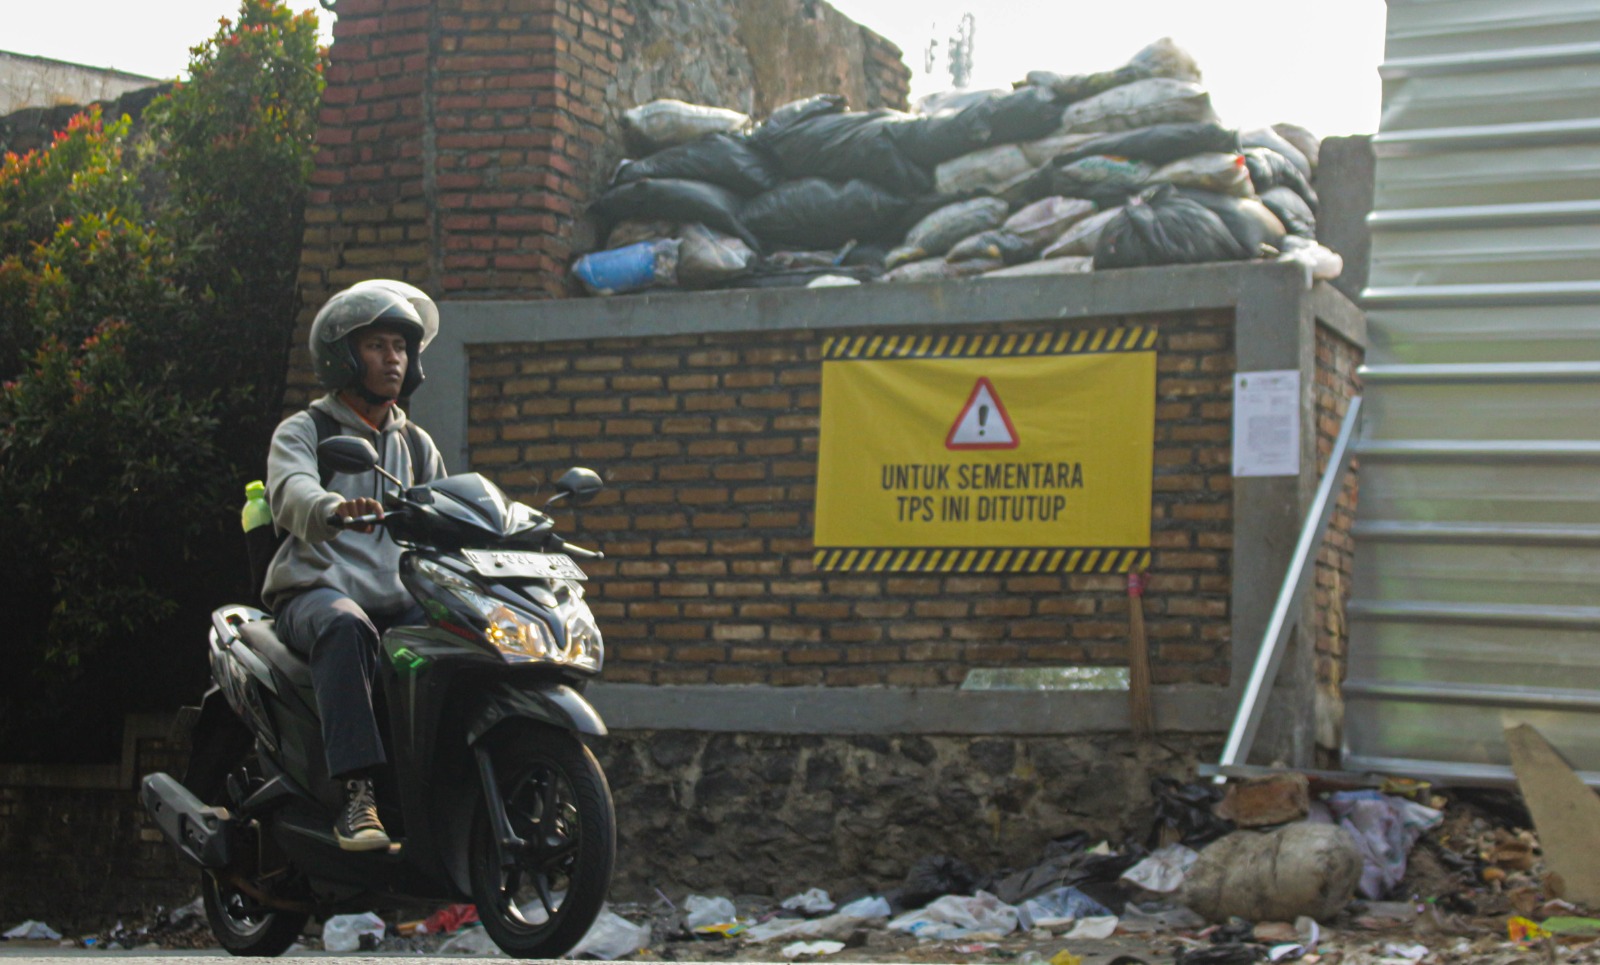 Terjadi penumpukan sampah di salah satu TPS sementara, di Kota Bandung. (Pandu/Jabarekspres)